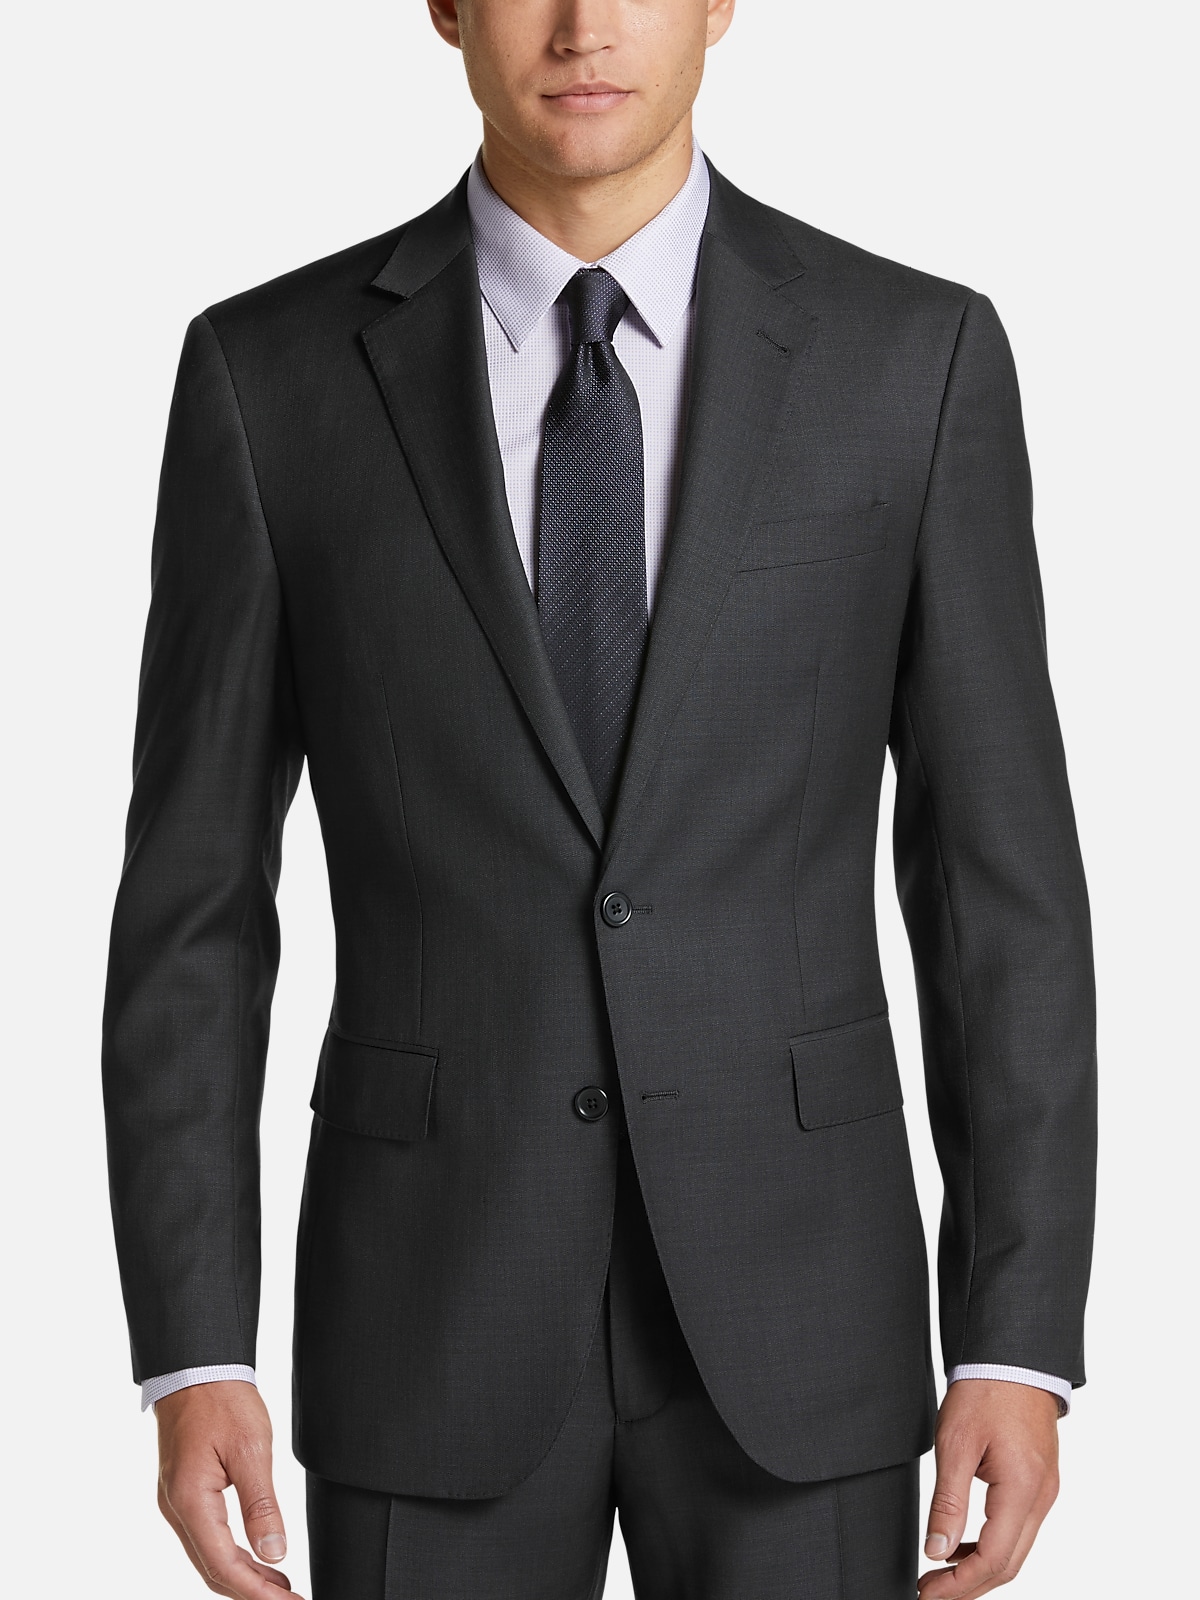 JOE Joseph Abboud Slim Fit Suit | All Clearance $39.99| Men's Wearhouse